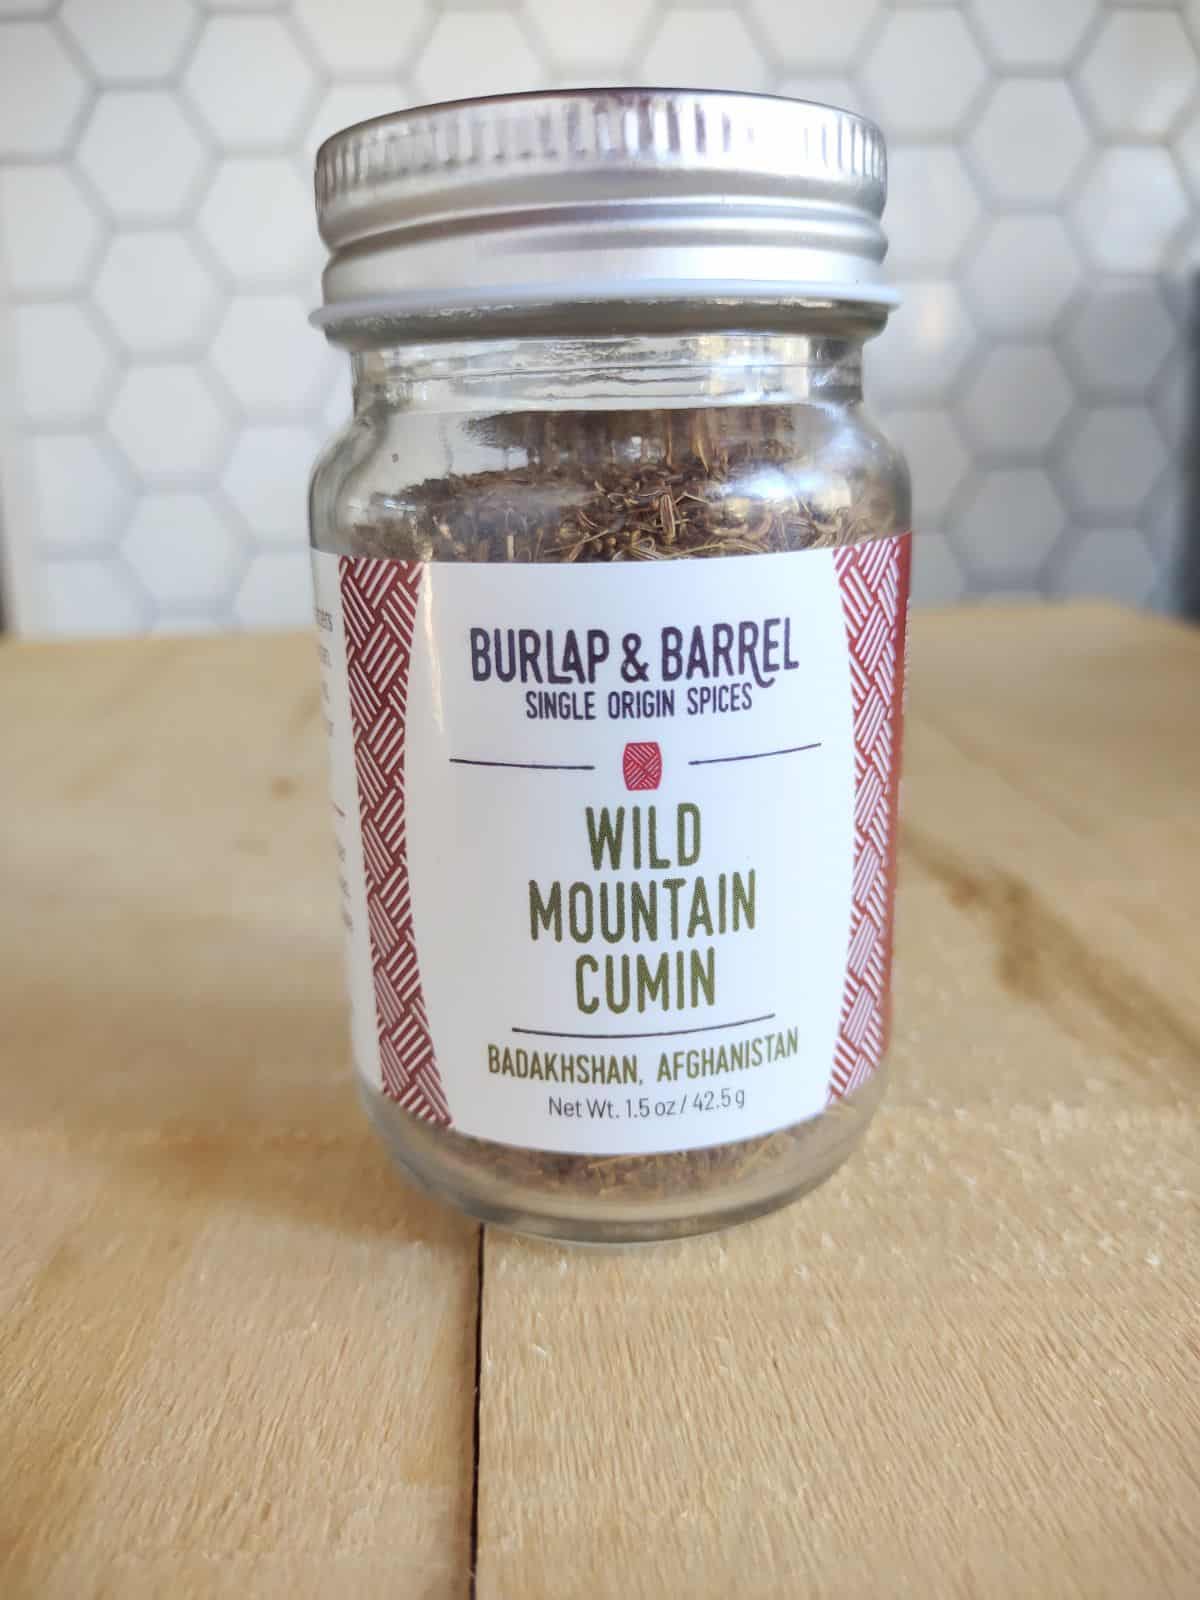 A jar of Burlap & Barrel Wild Mountain Cumin sitting on a wood board.